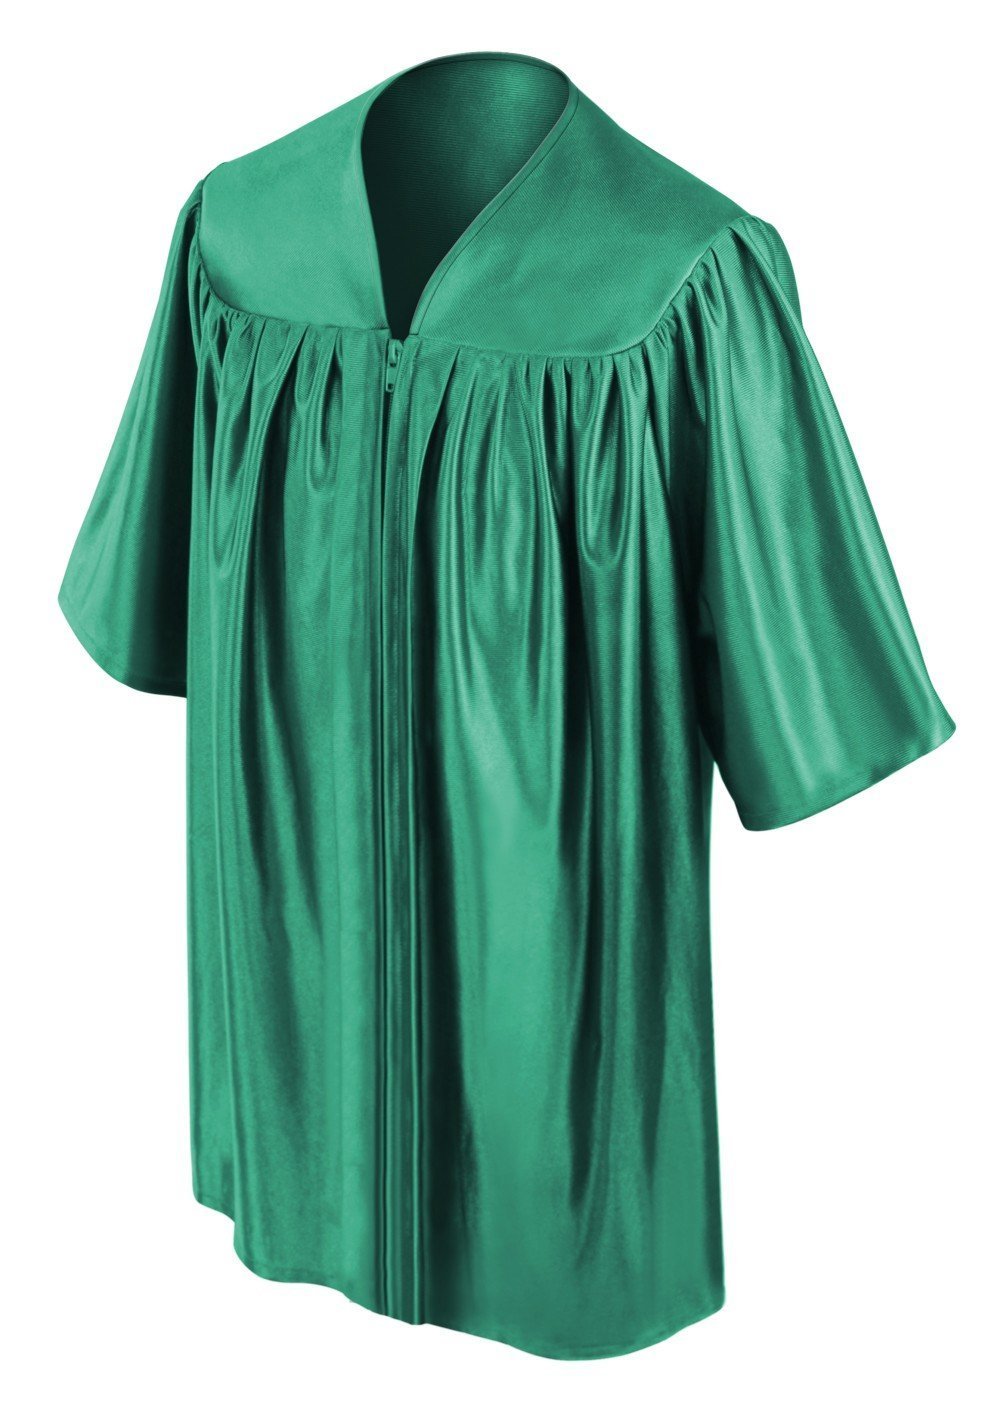 Child's Shiny Emerald Green Choir Robe - Churchings